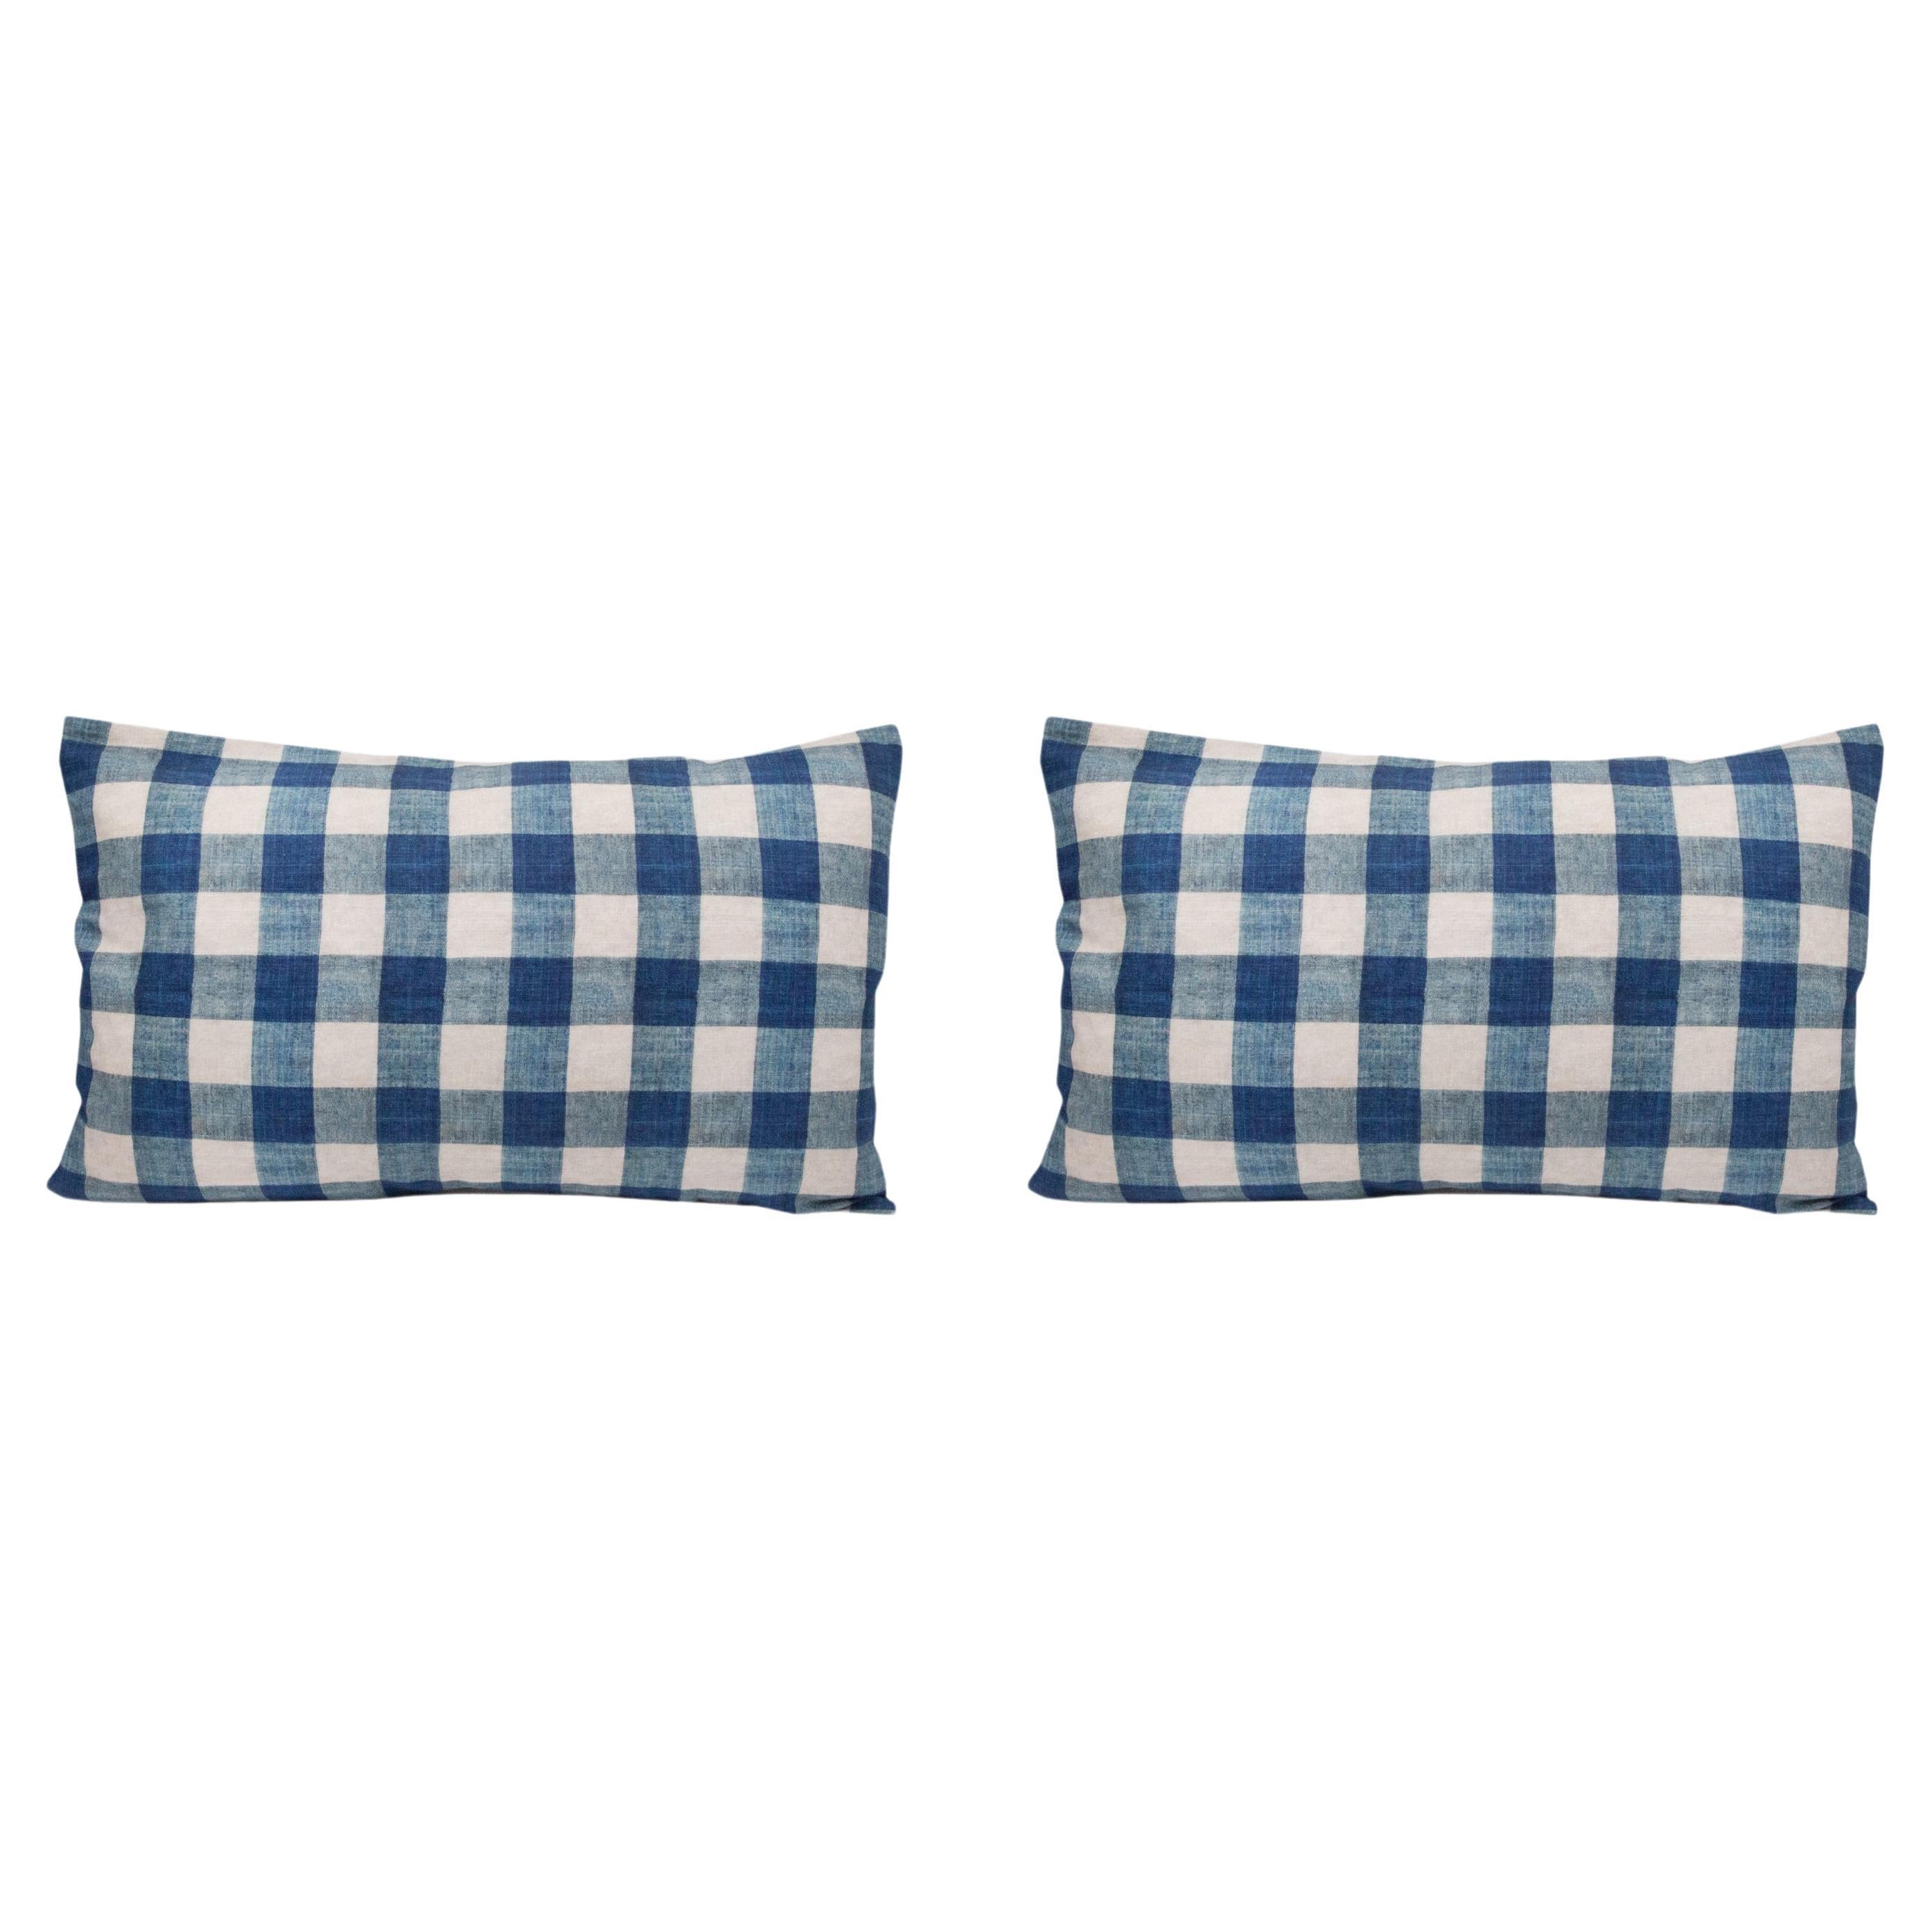 Pair of Large Linen Pillow Cushions - Carreaux Indigo pattern - Made in Paris